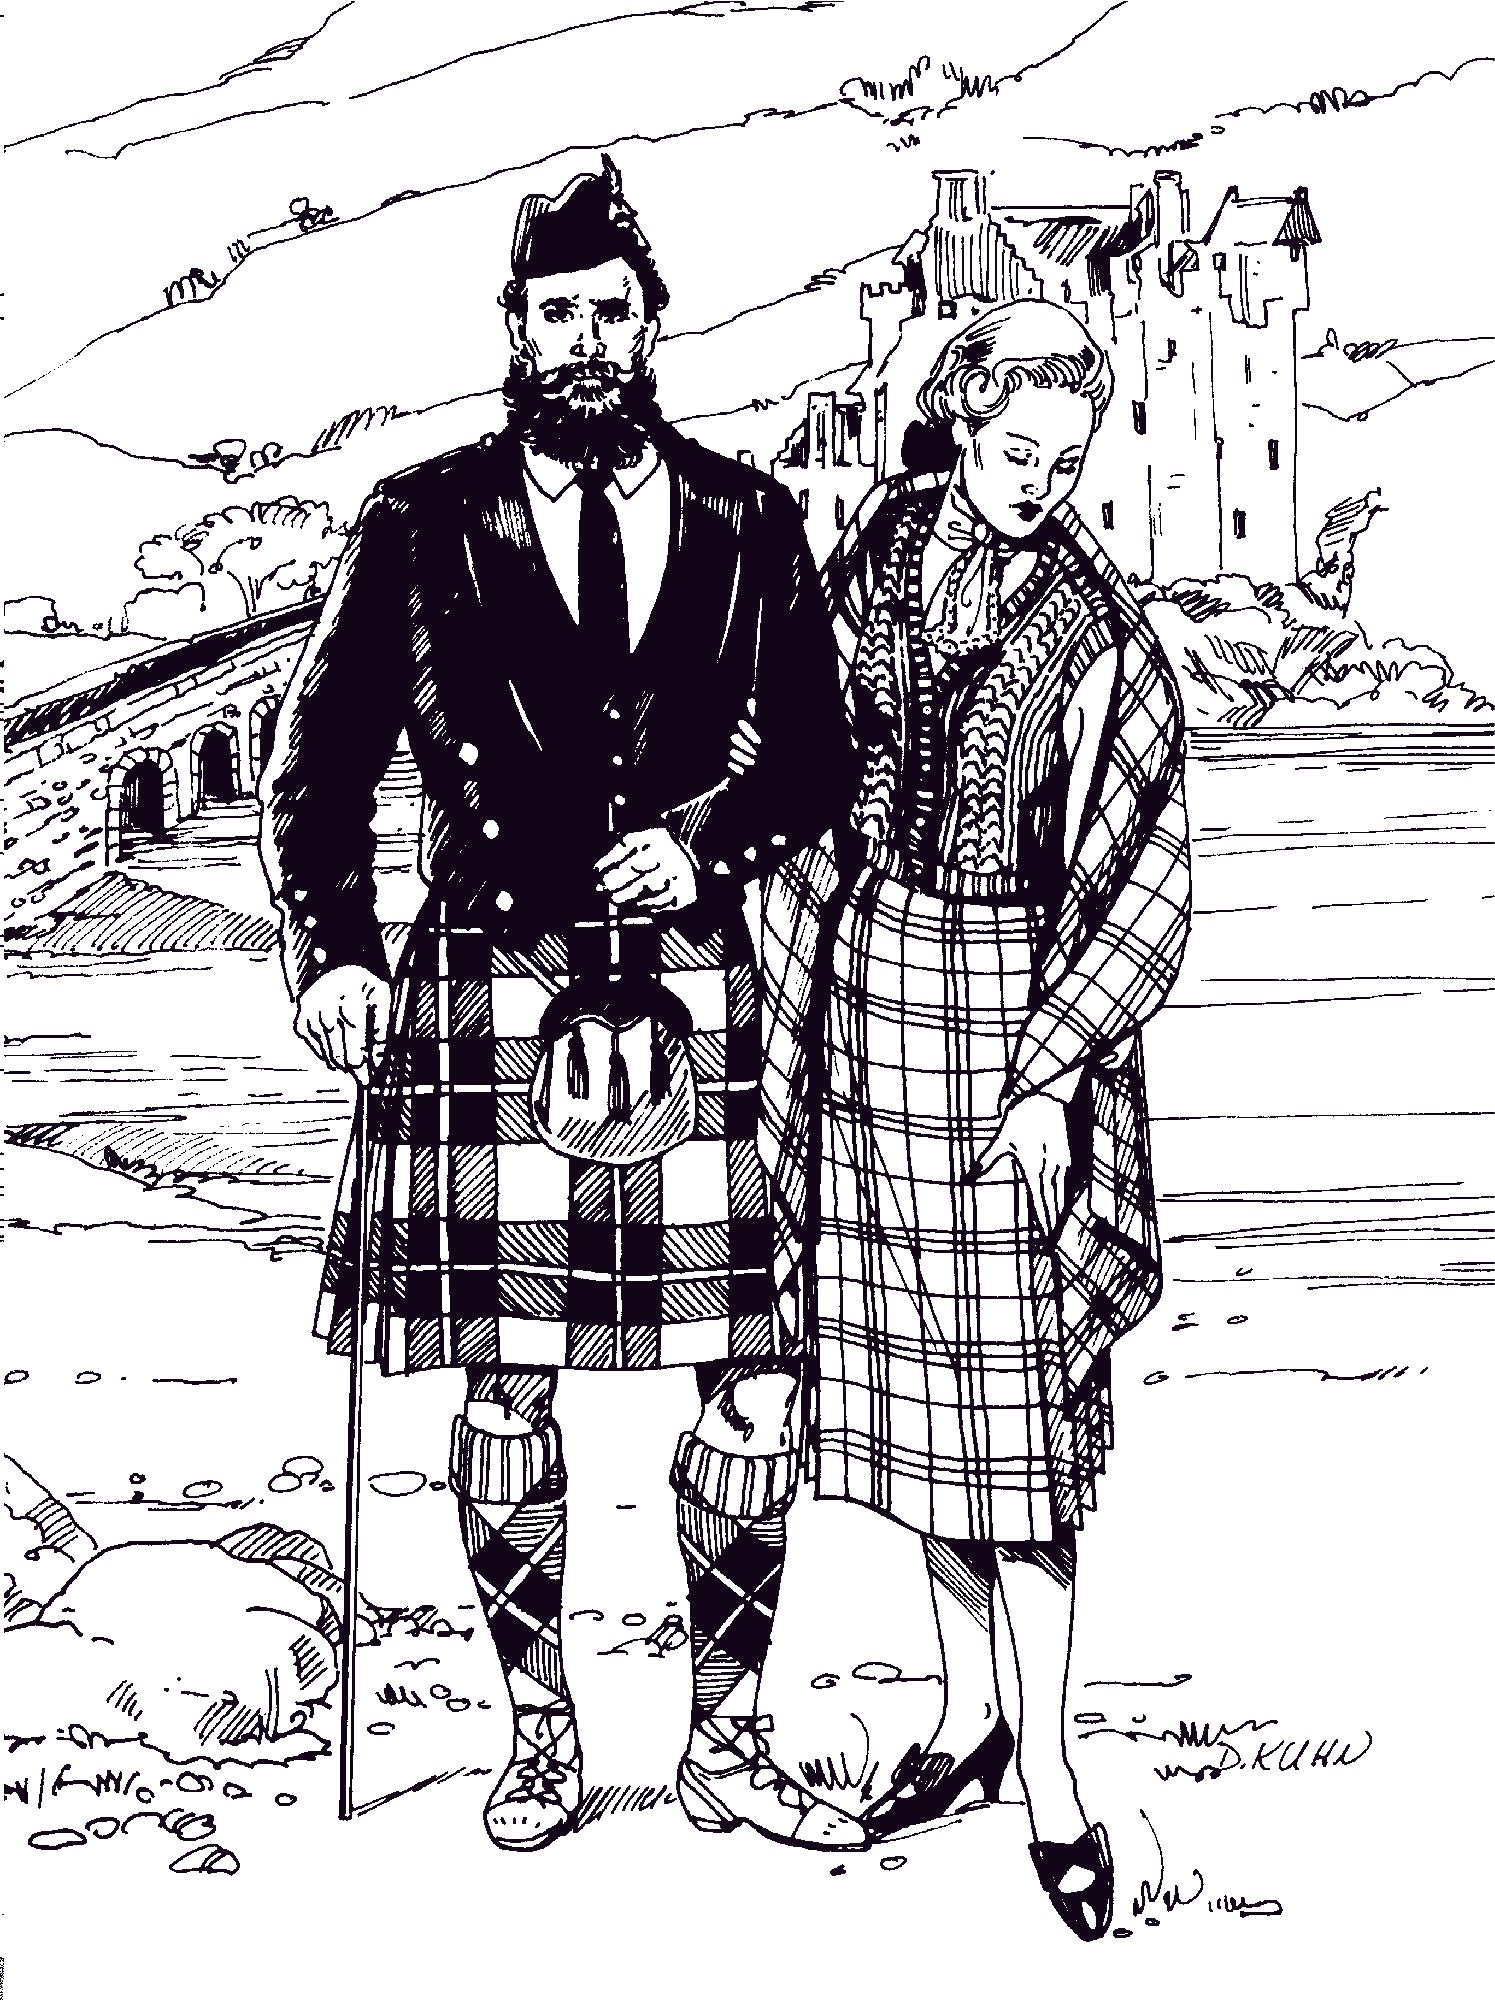 Brief History of the Scottish Kilt